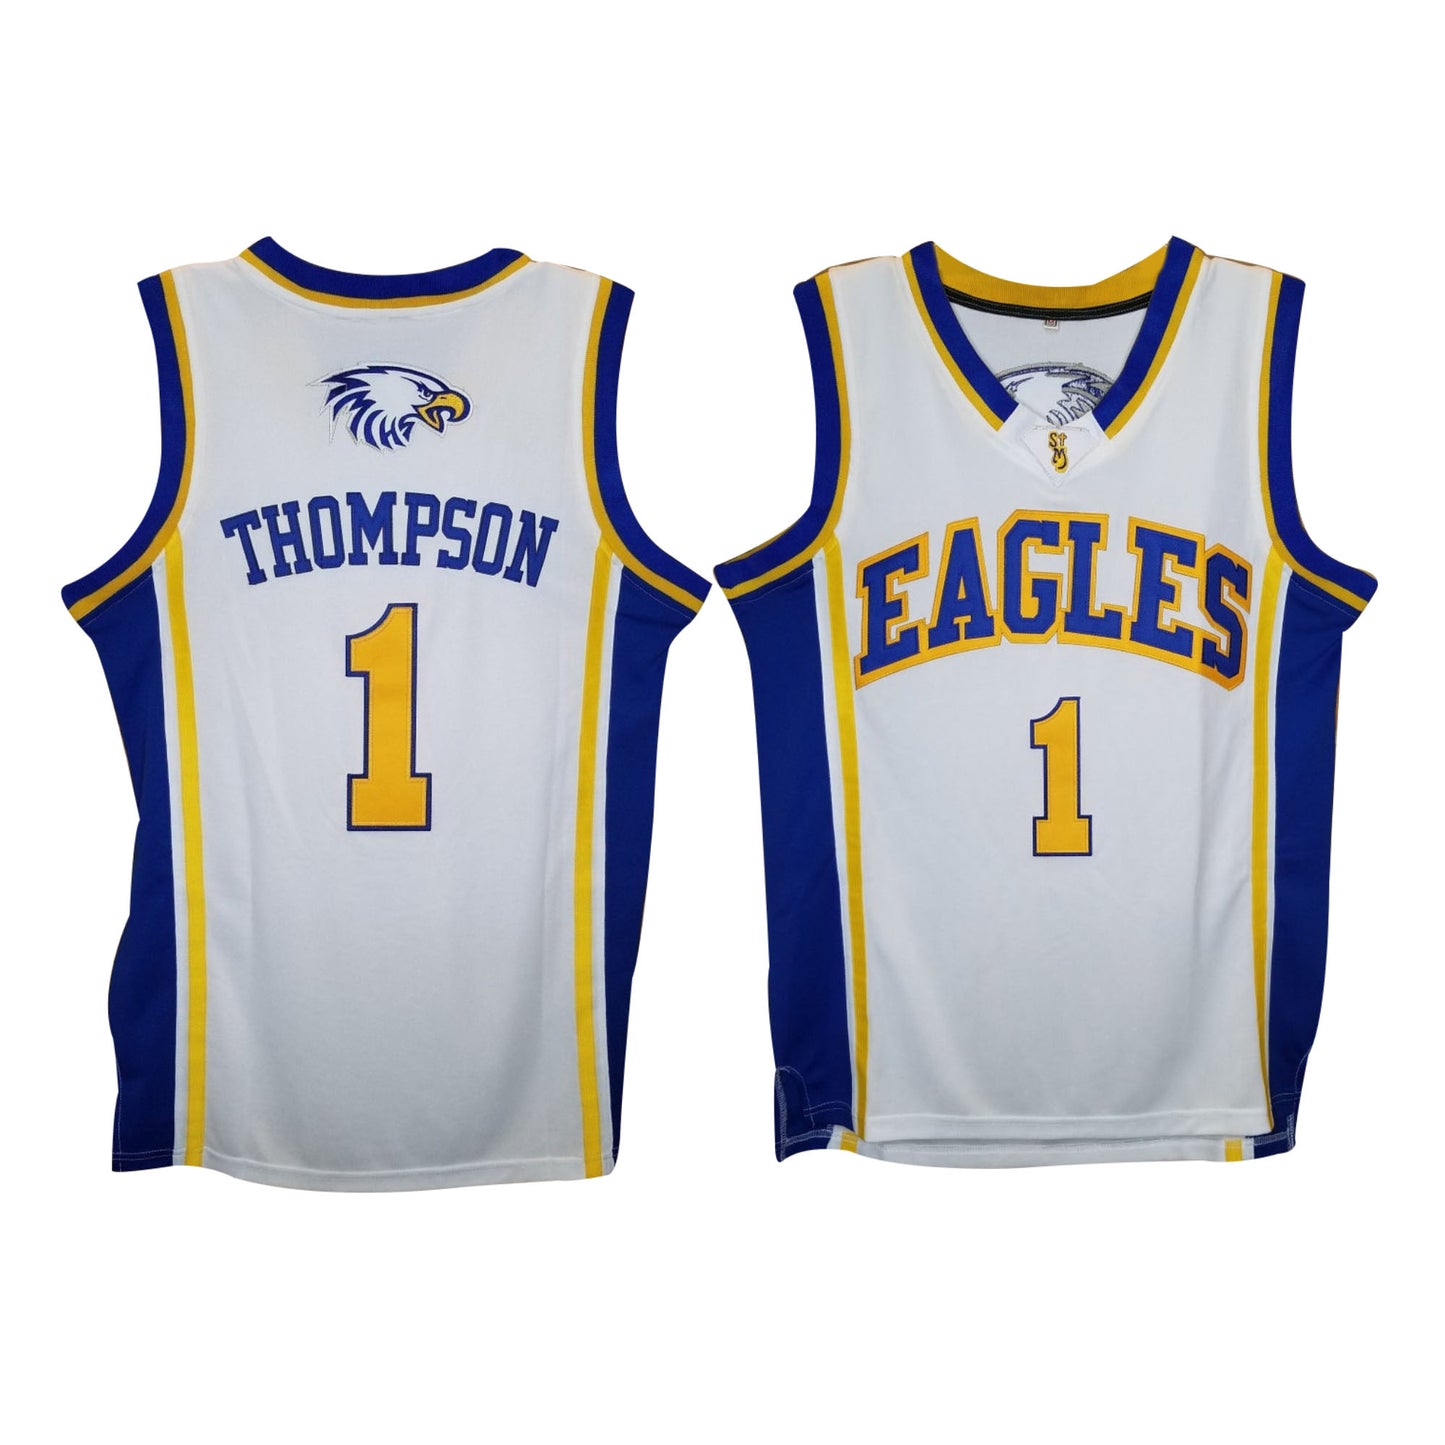 Klay Thompson High School 1 Basketball Jersey